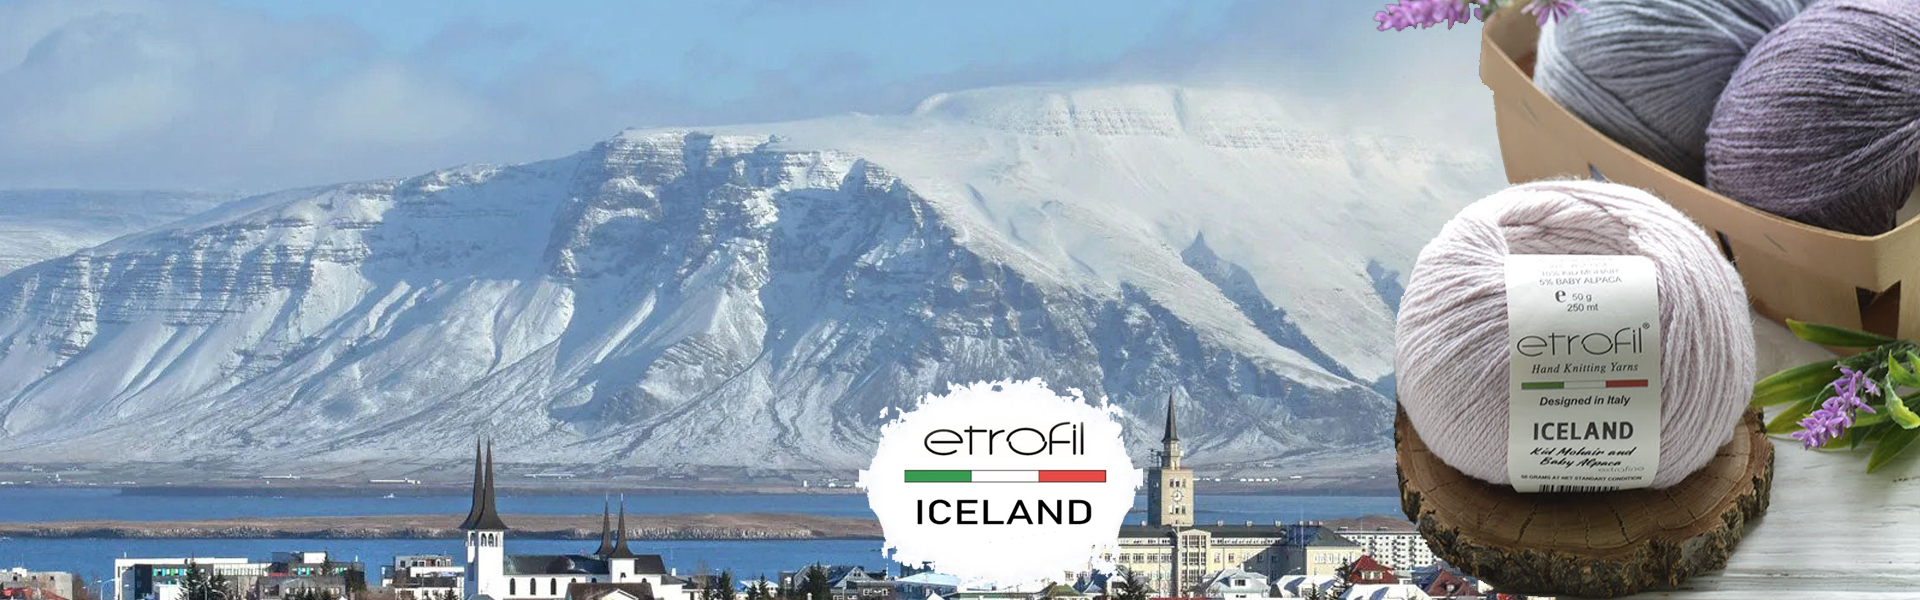 Etrofil Iceland